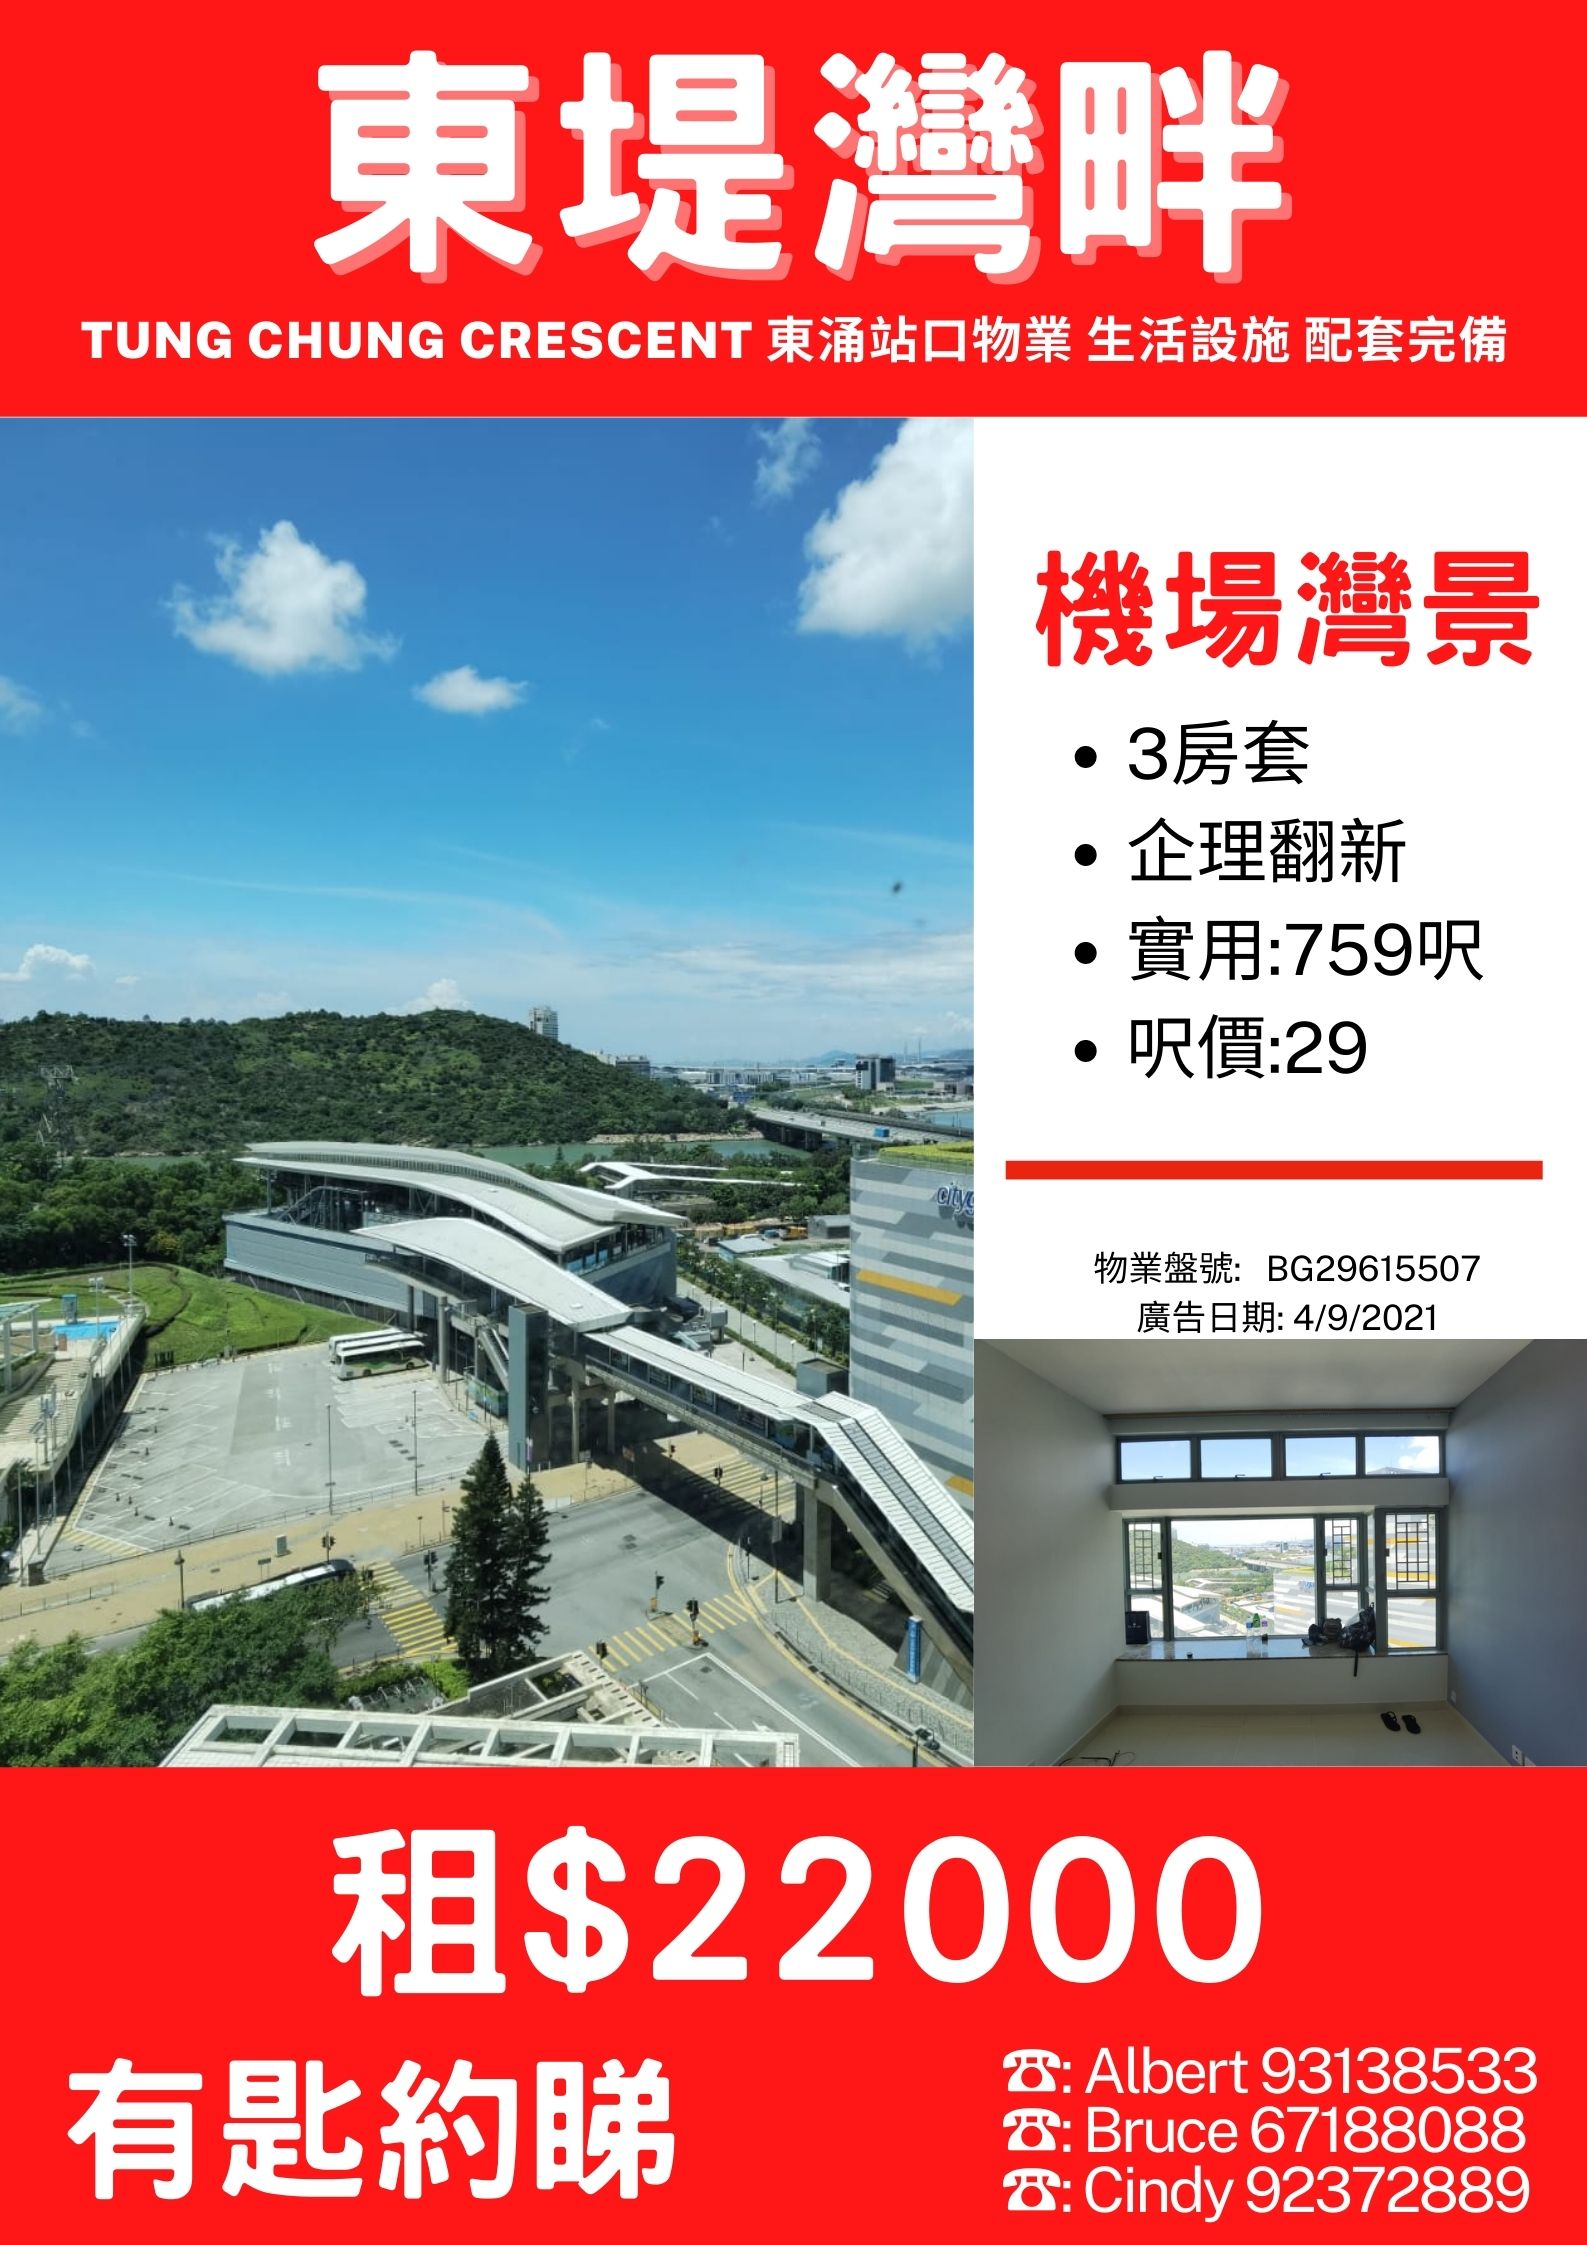  Tung Chung Crescent 三房套，機場灣景，旅遊地標，盡在眼前，有匙約睇67188088 陳生